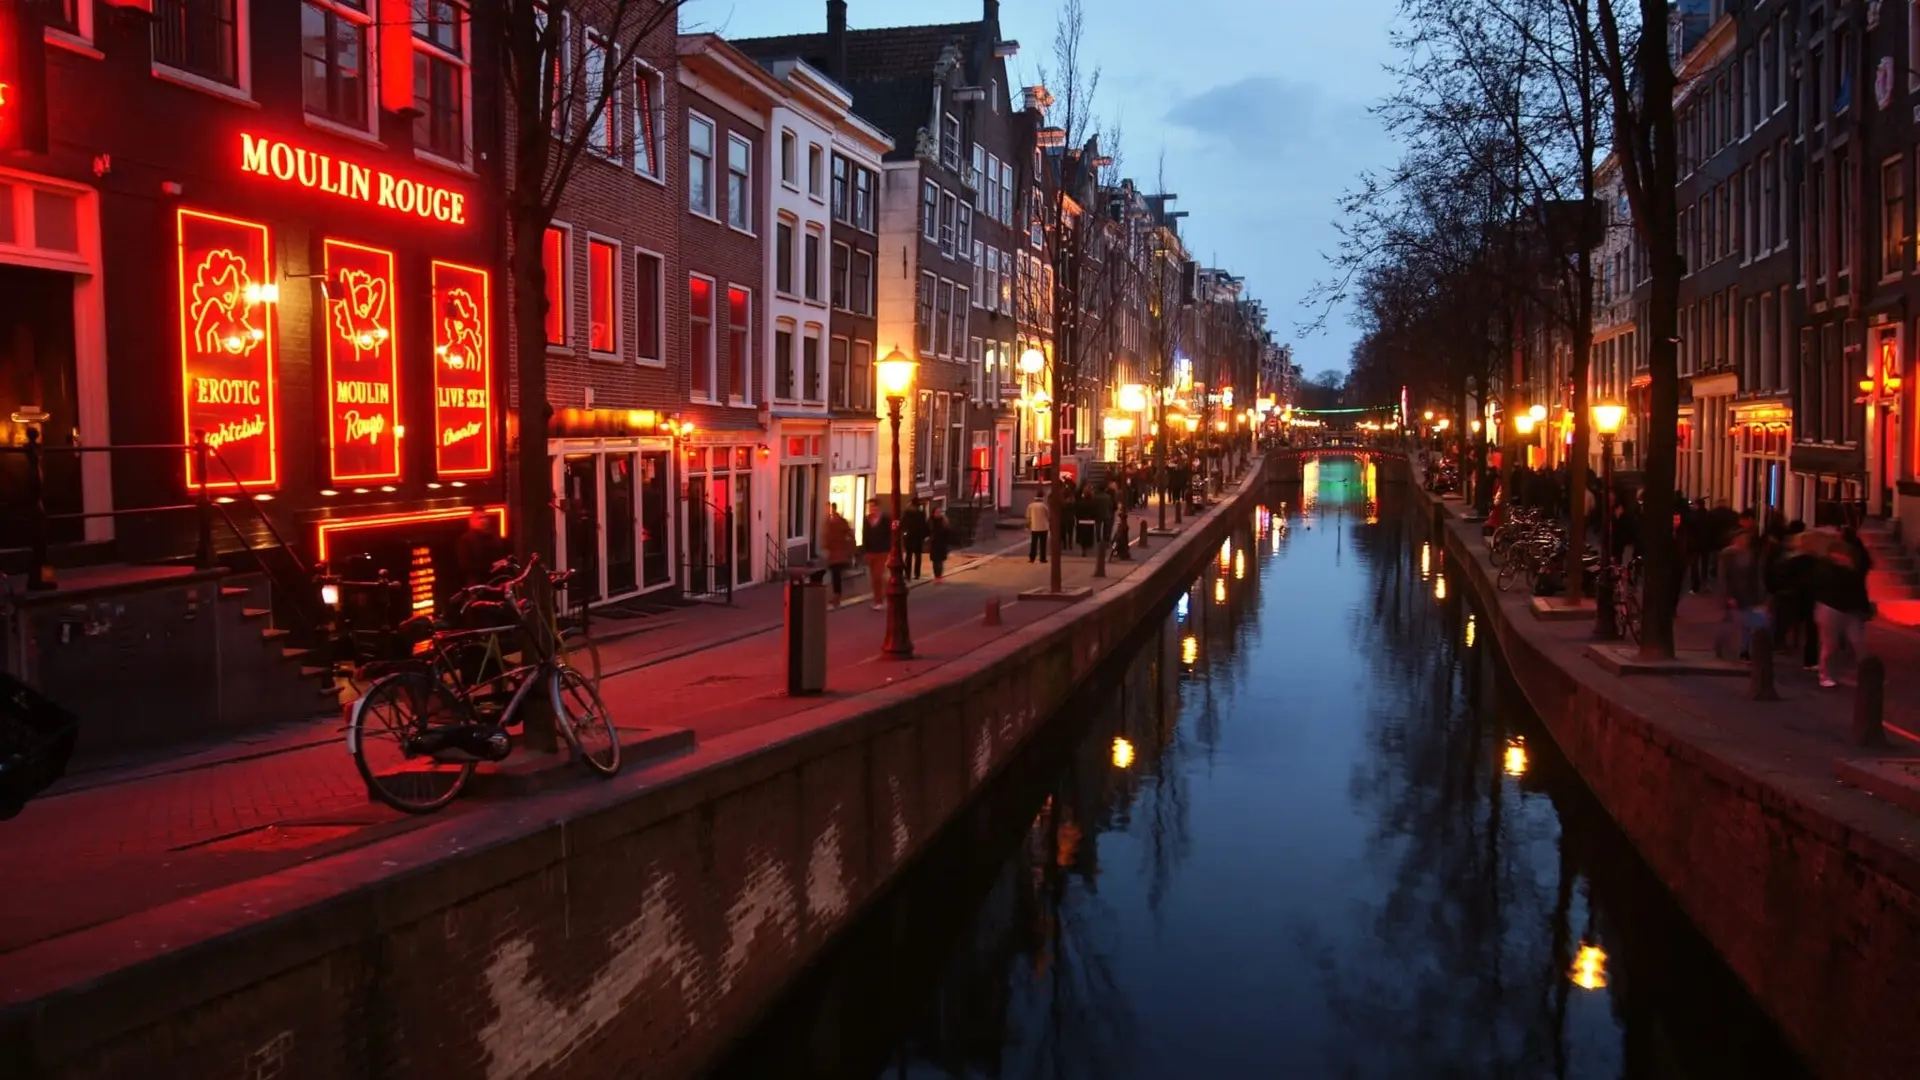 Destinations Articles - Amsterdam Travel Guide